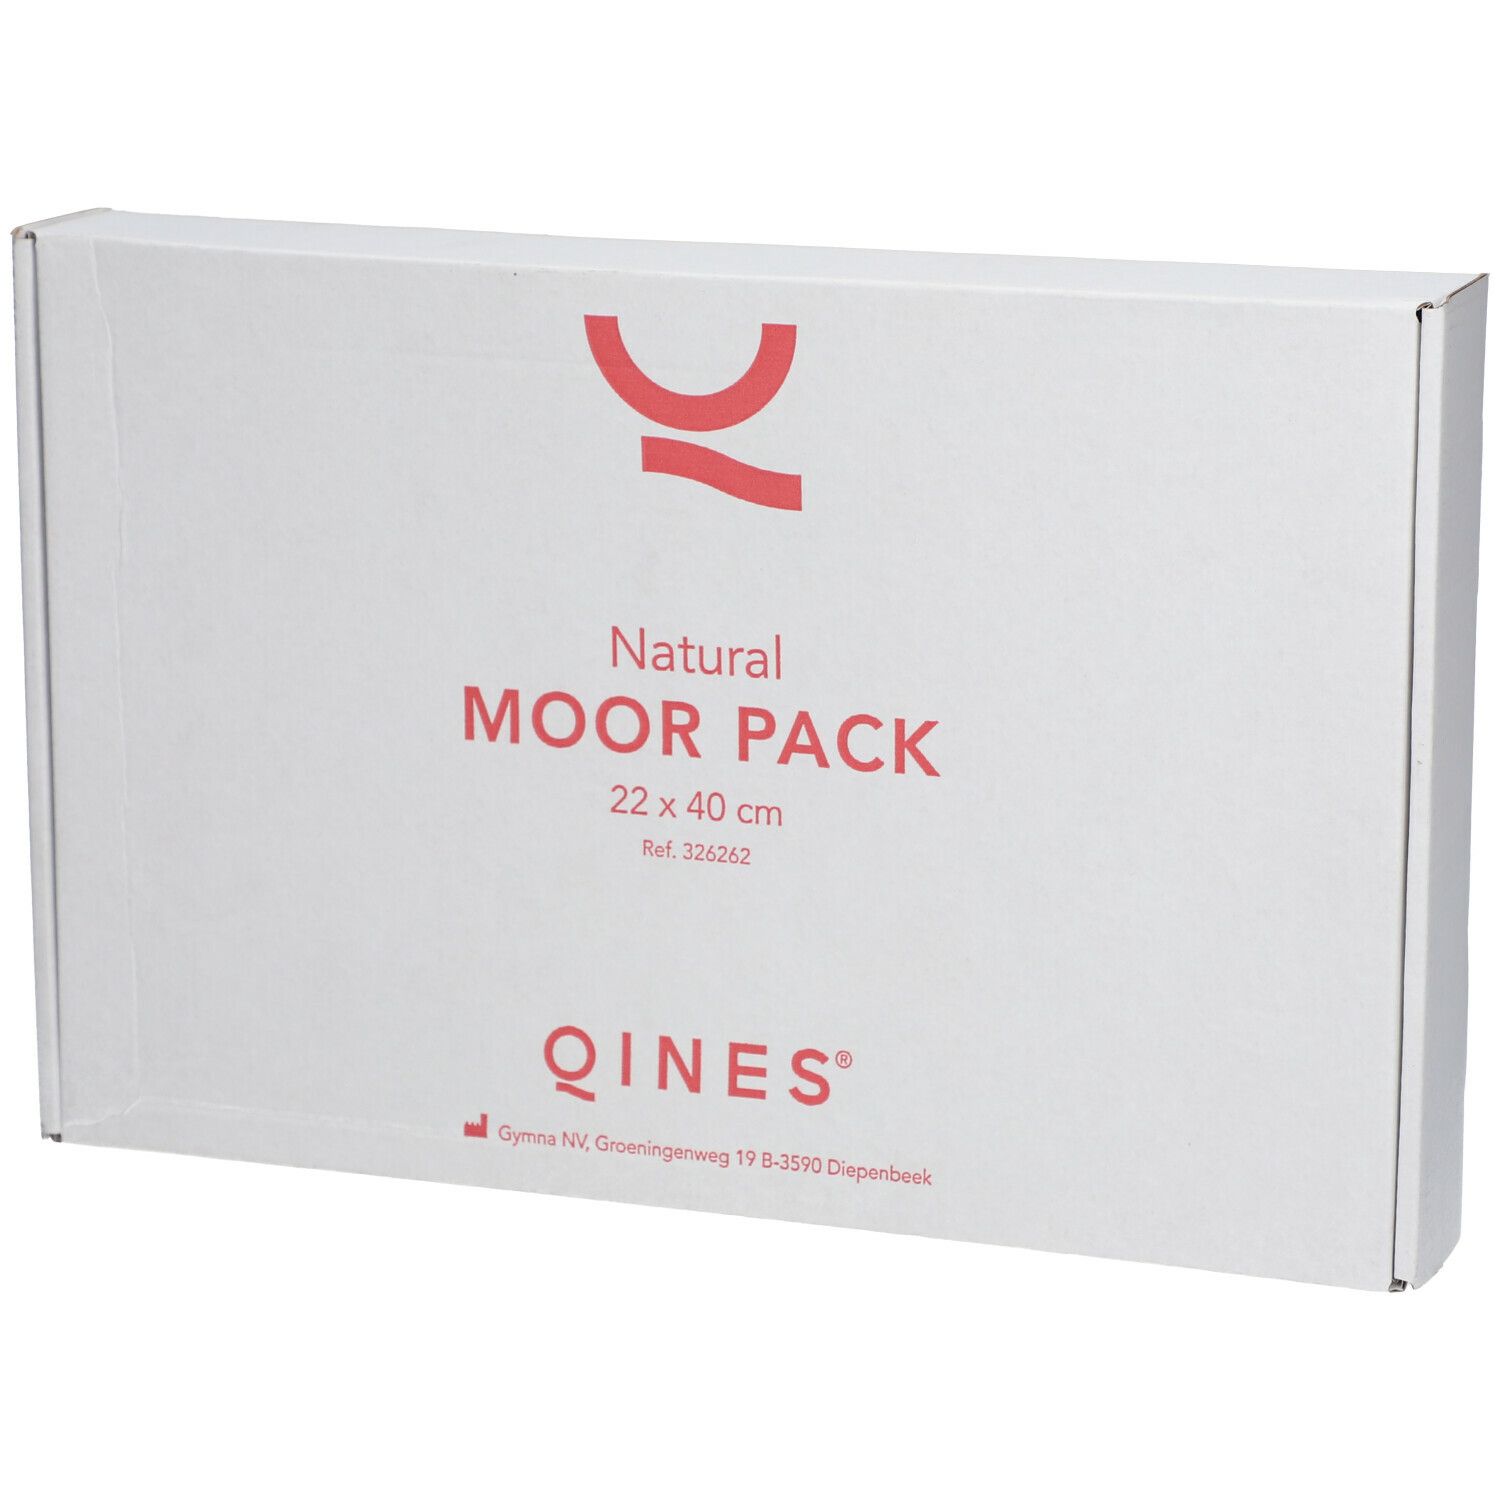 Qines® Natural Moor Pack 22 x 40 cm